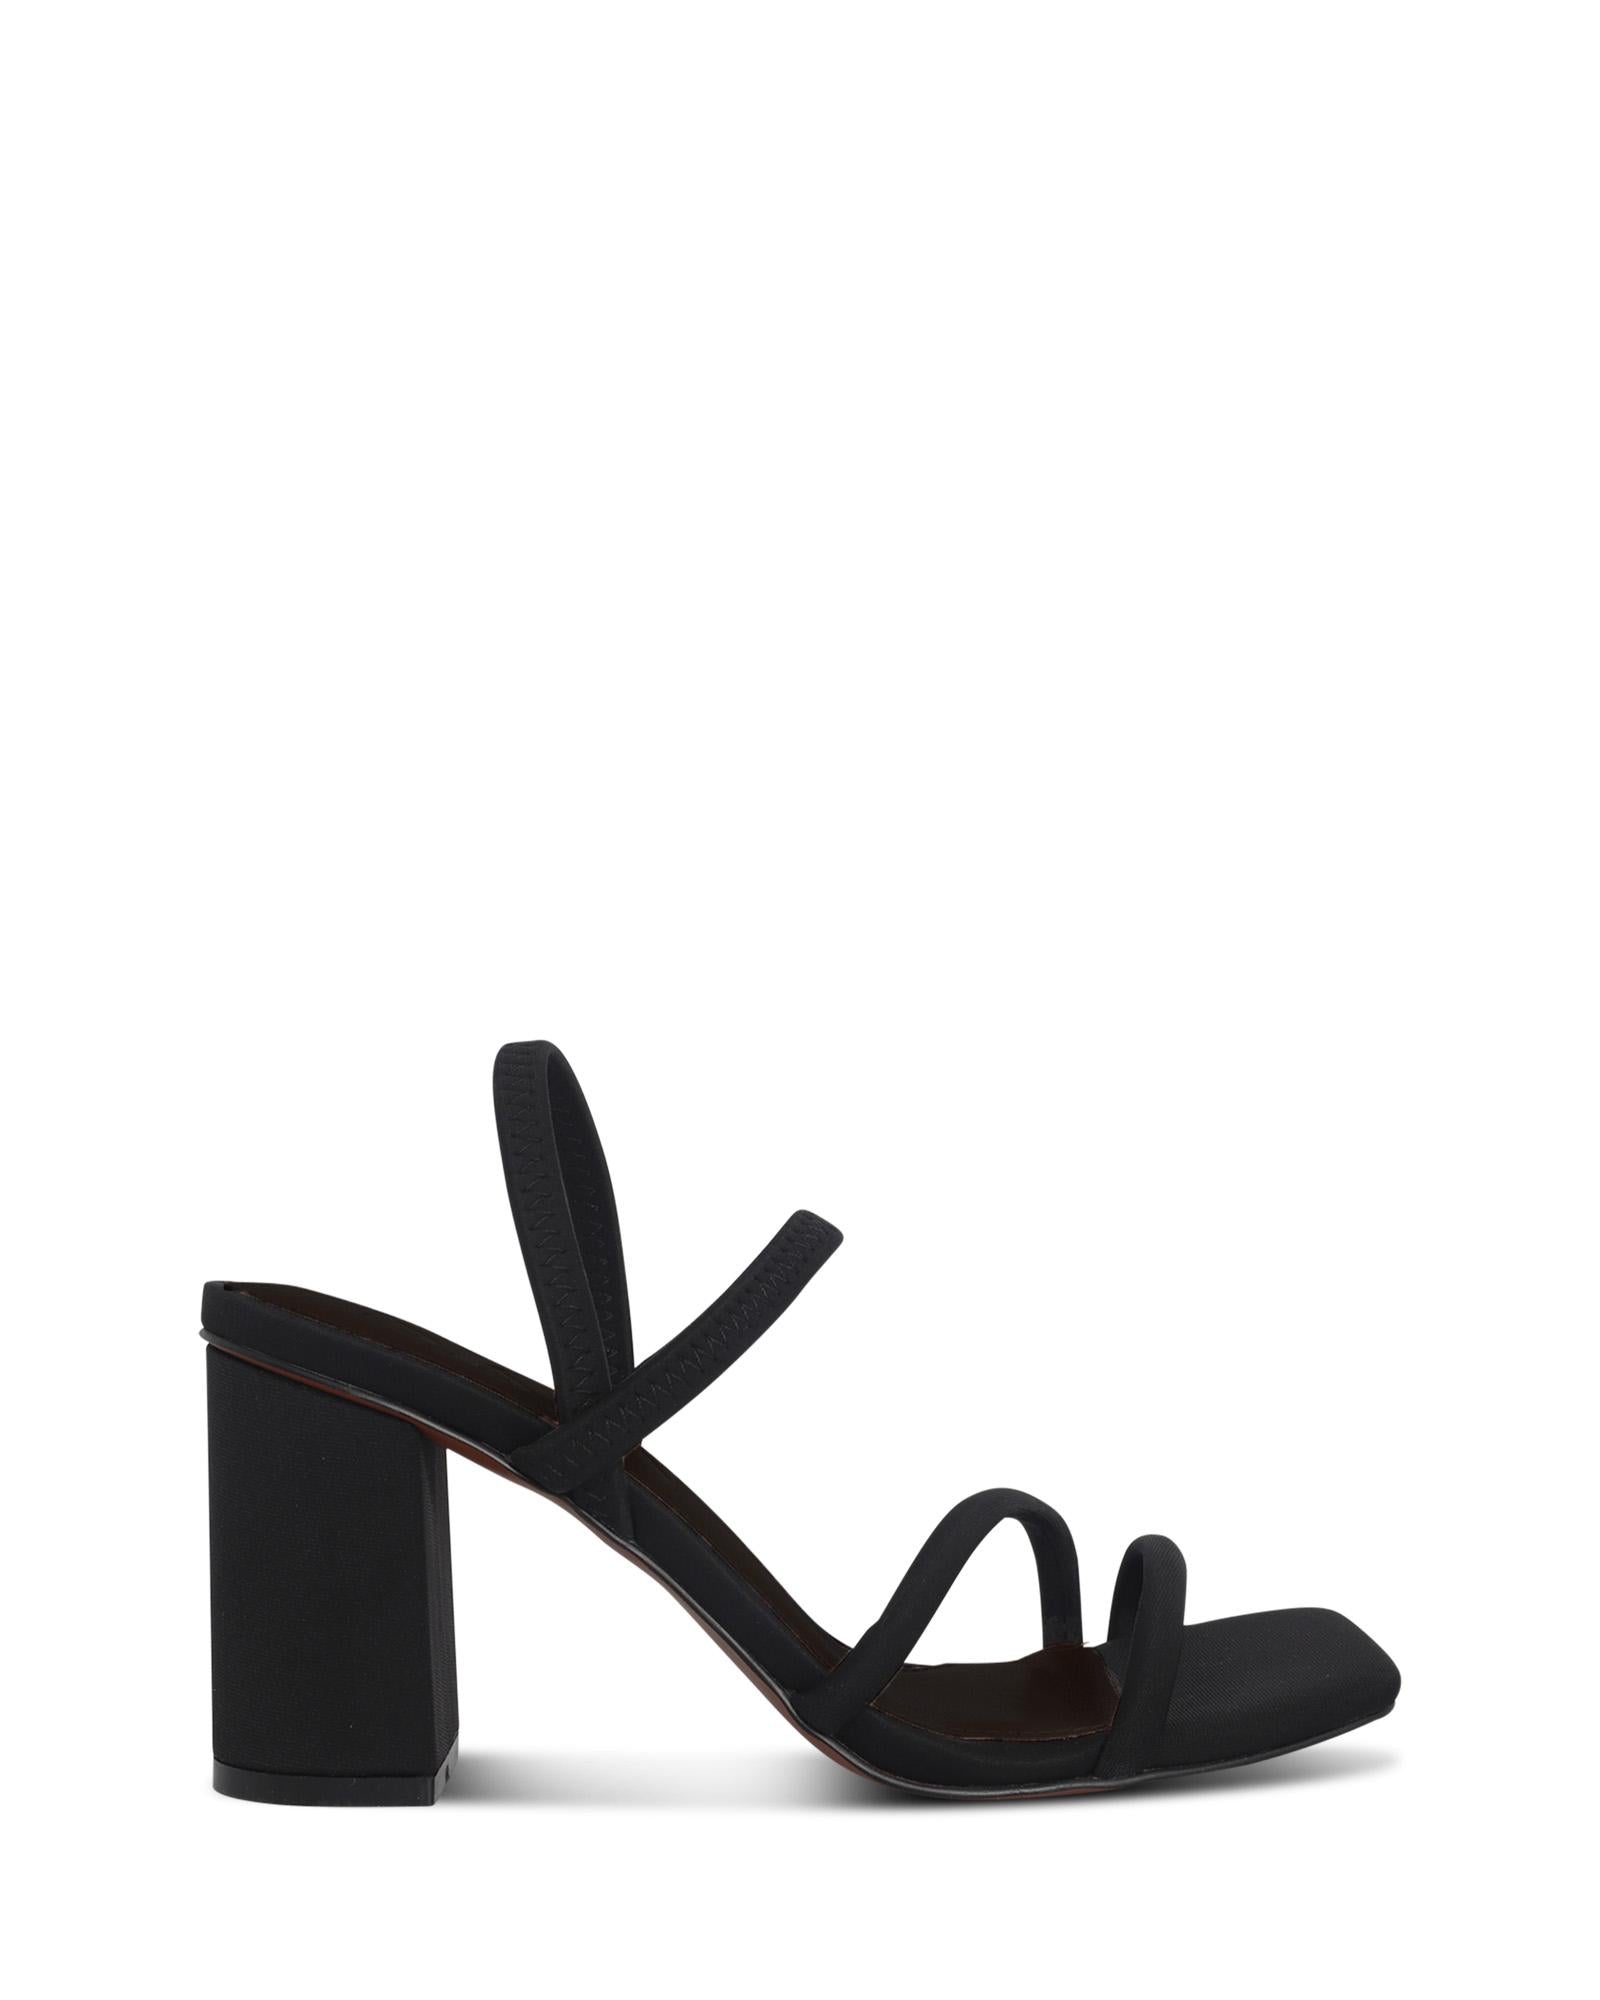 Colombo Black 8cm Heel